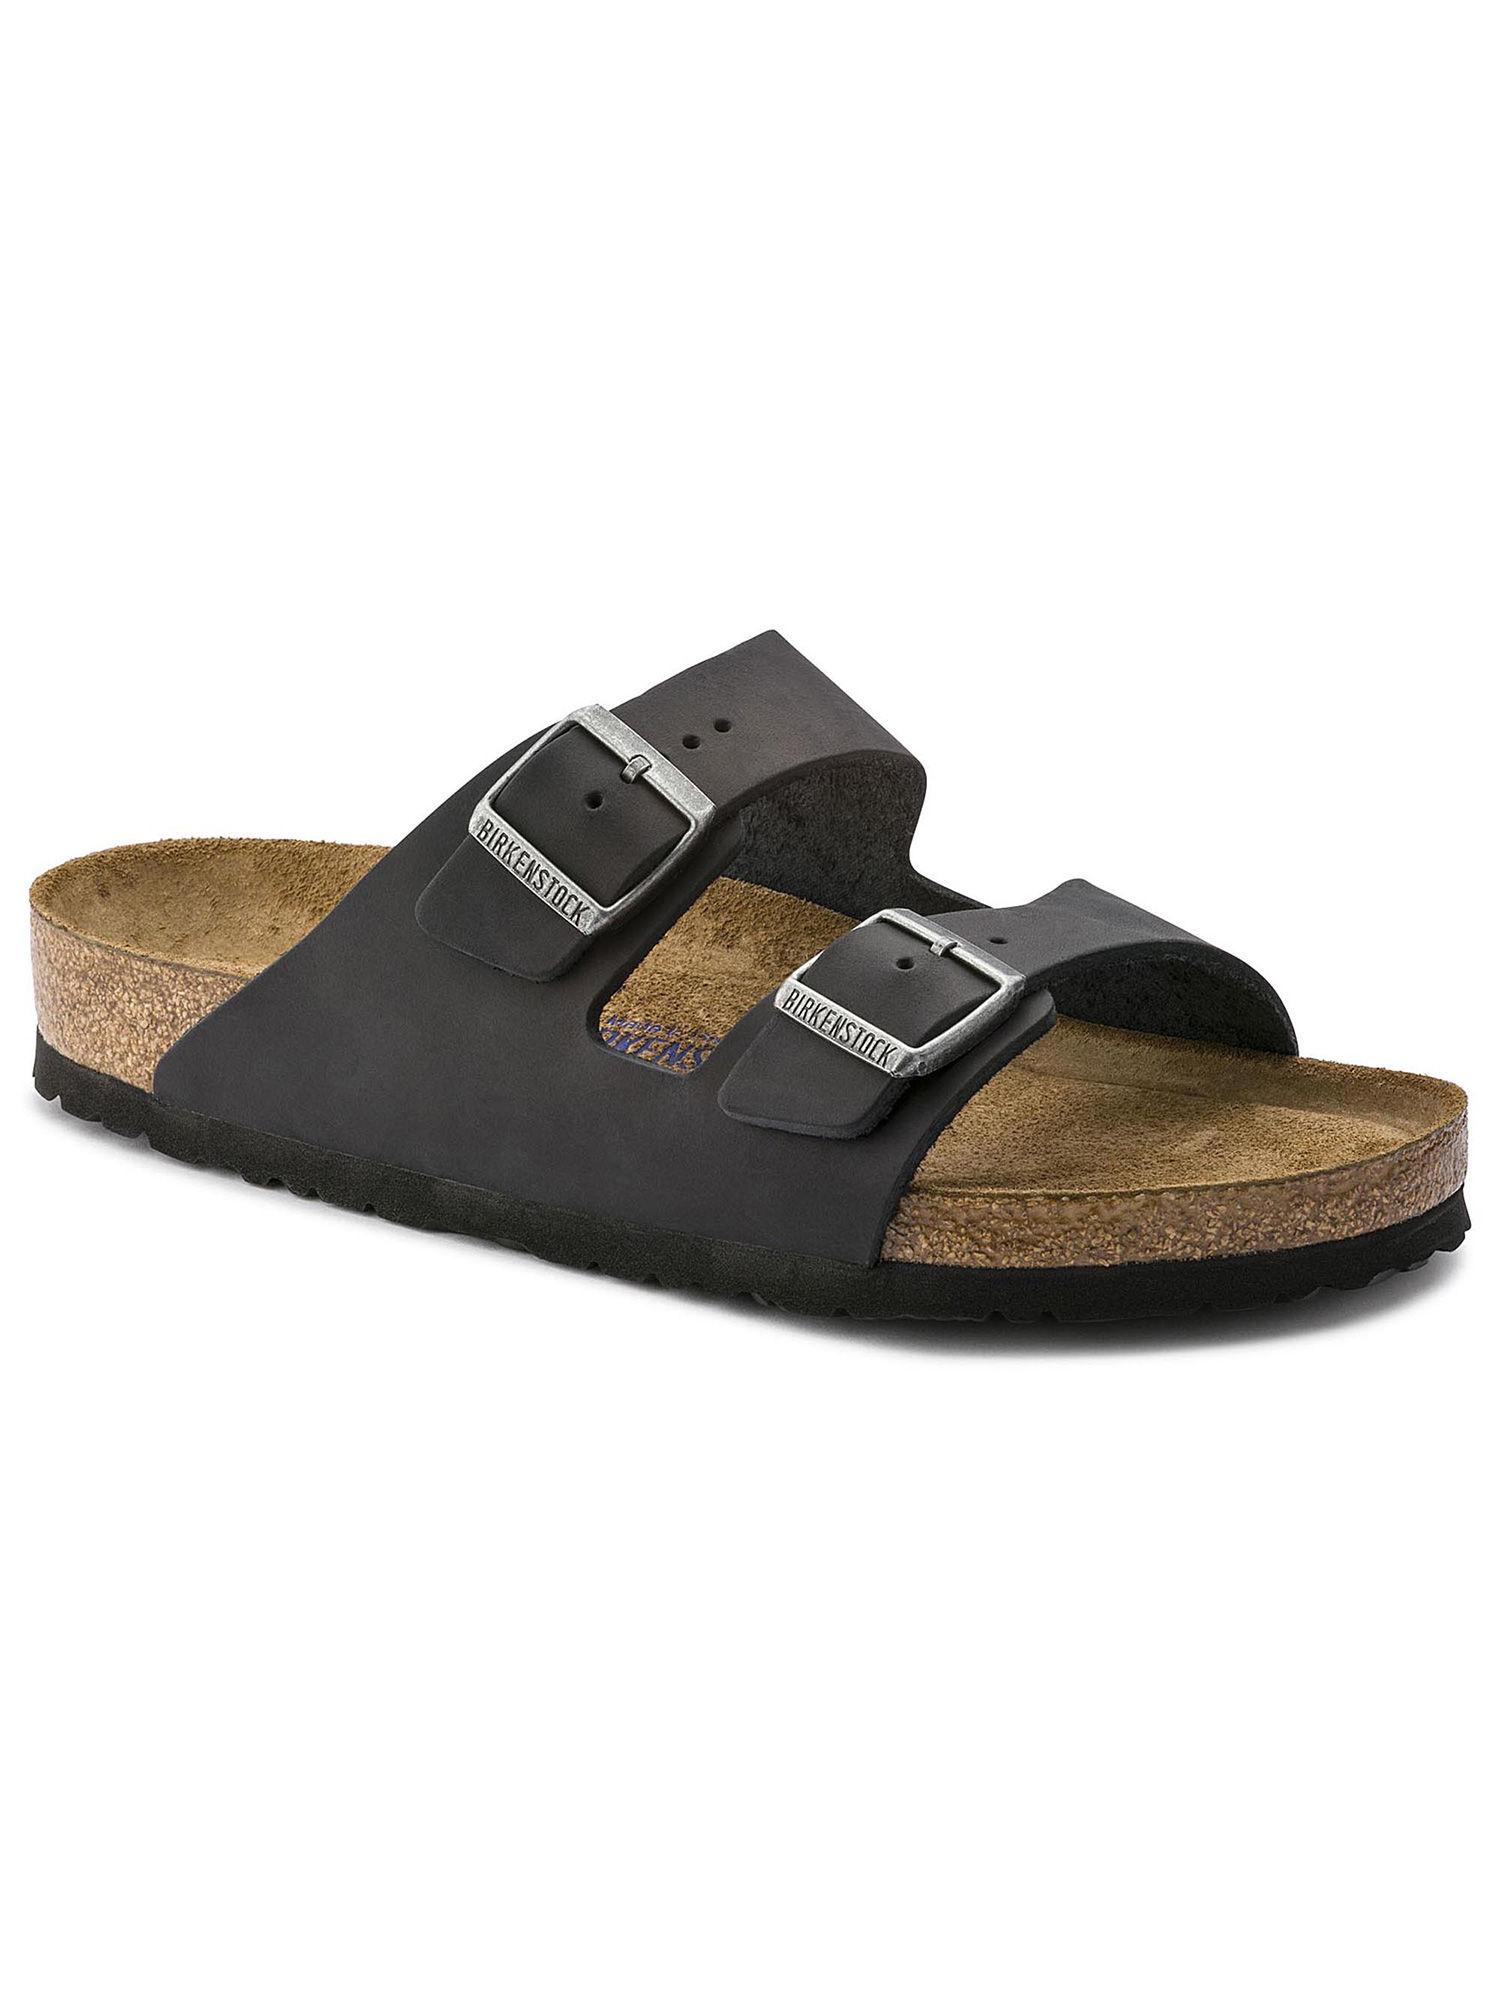 Arizona Soft Footbed Oiled Nubuck Leather Black Regular Width Unisex Sandals